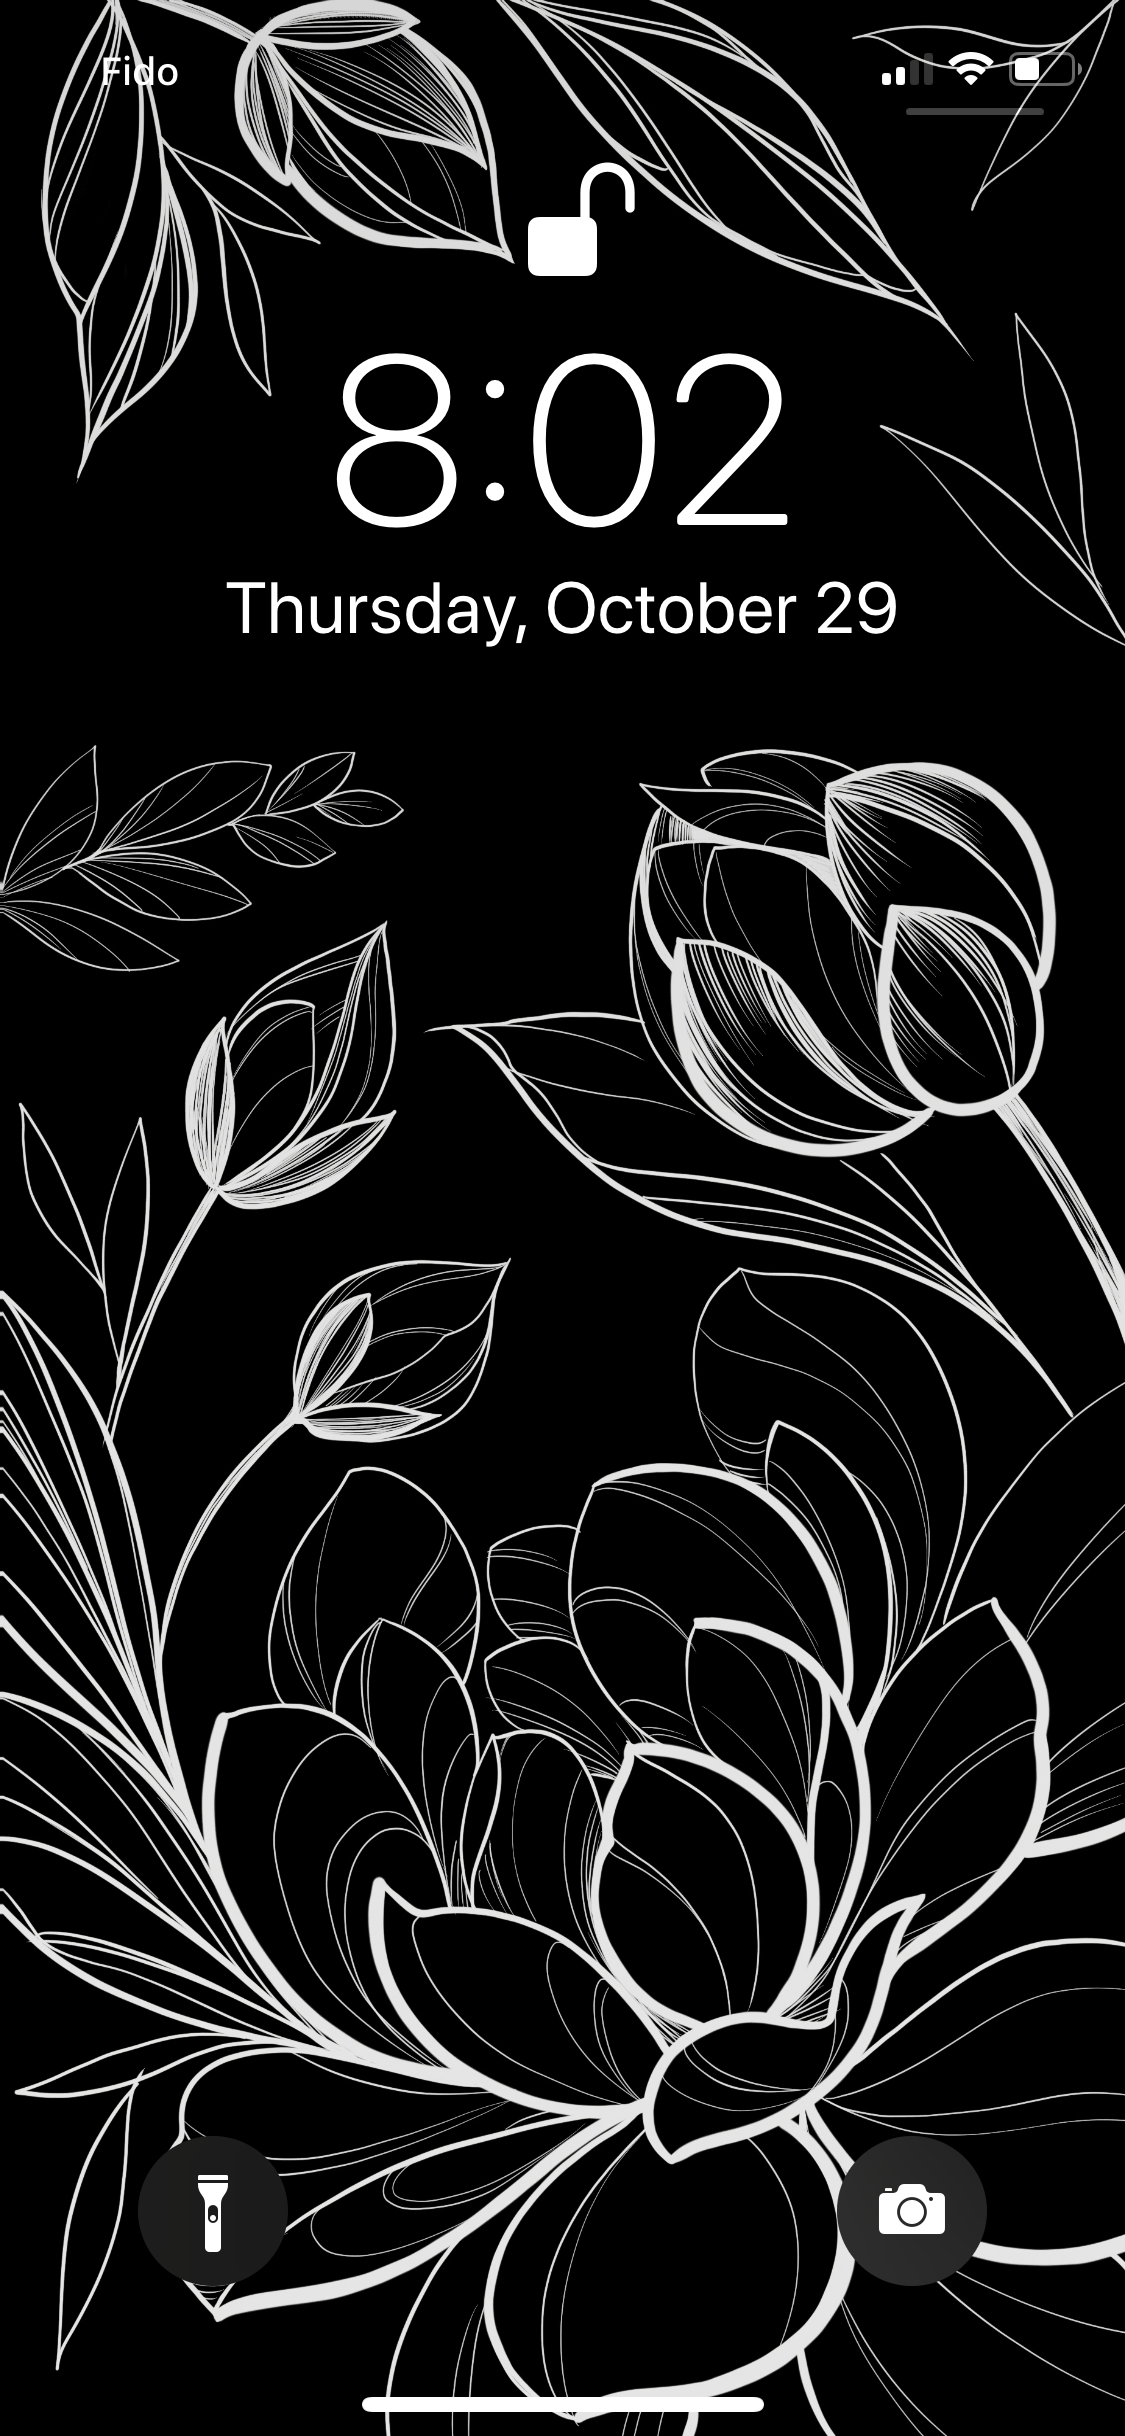 Wallpaper: lotus flower stock image. Image of pond, flower - 104486411